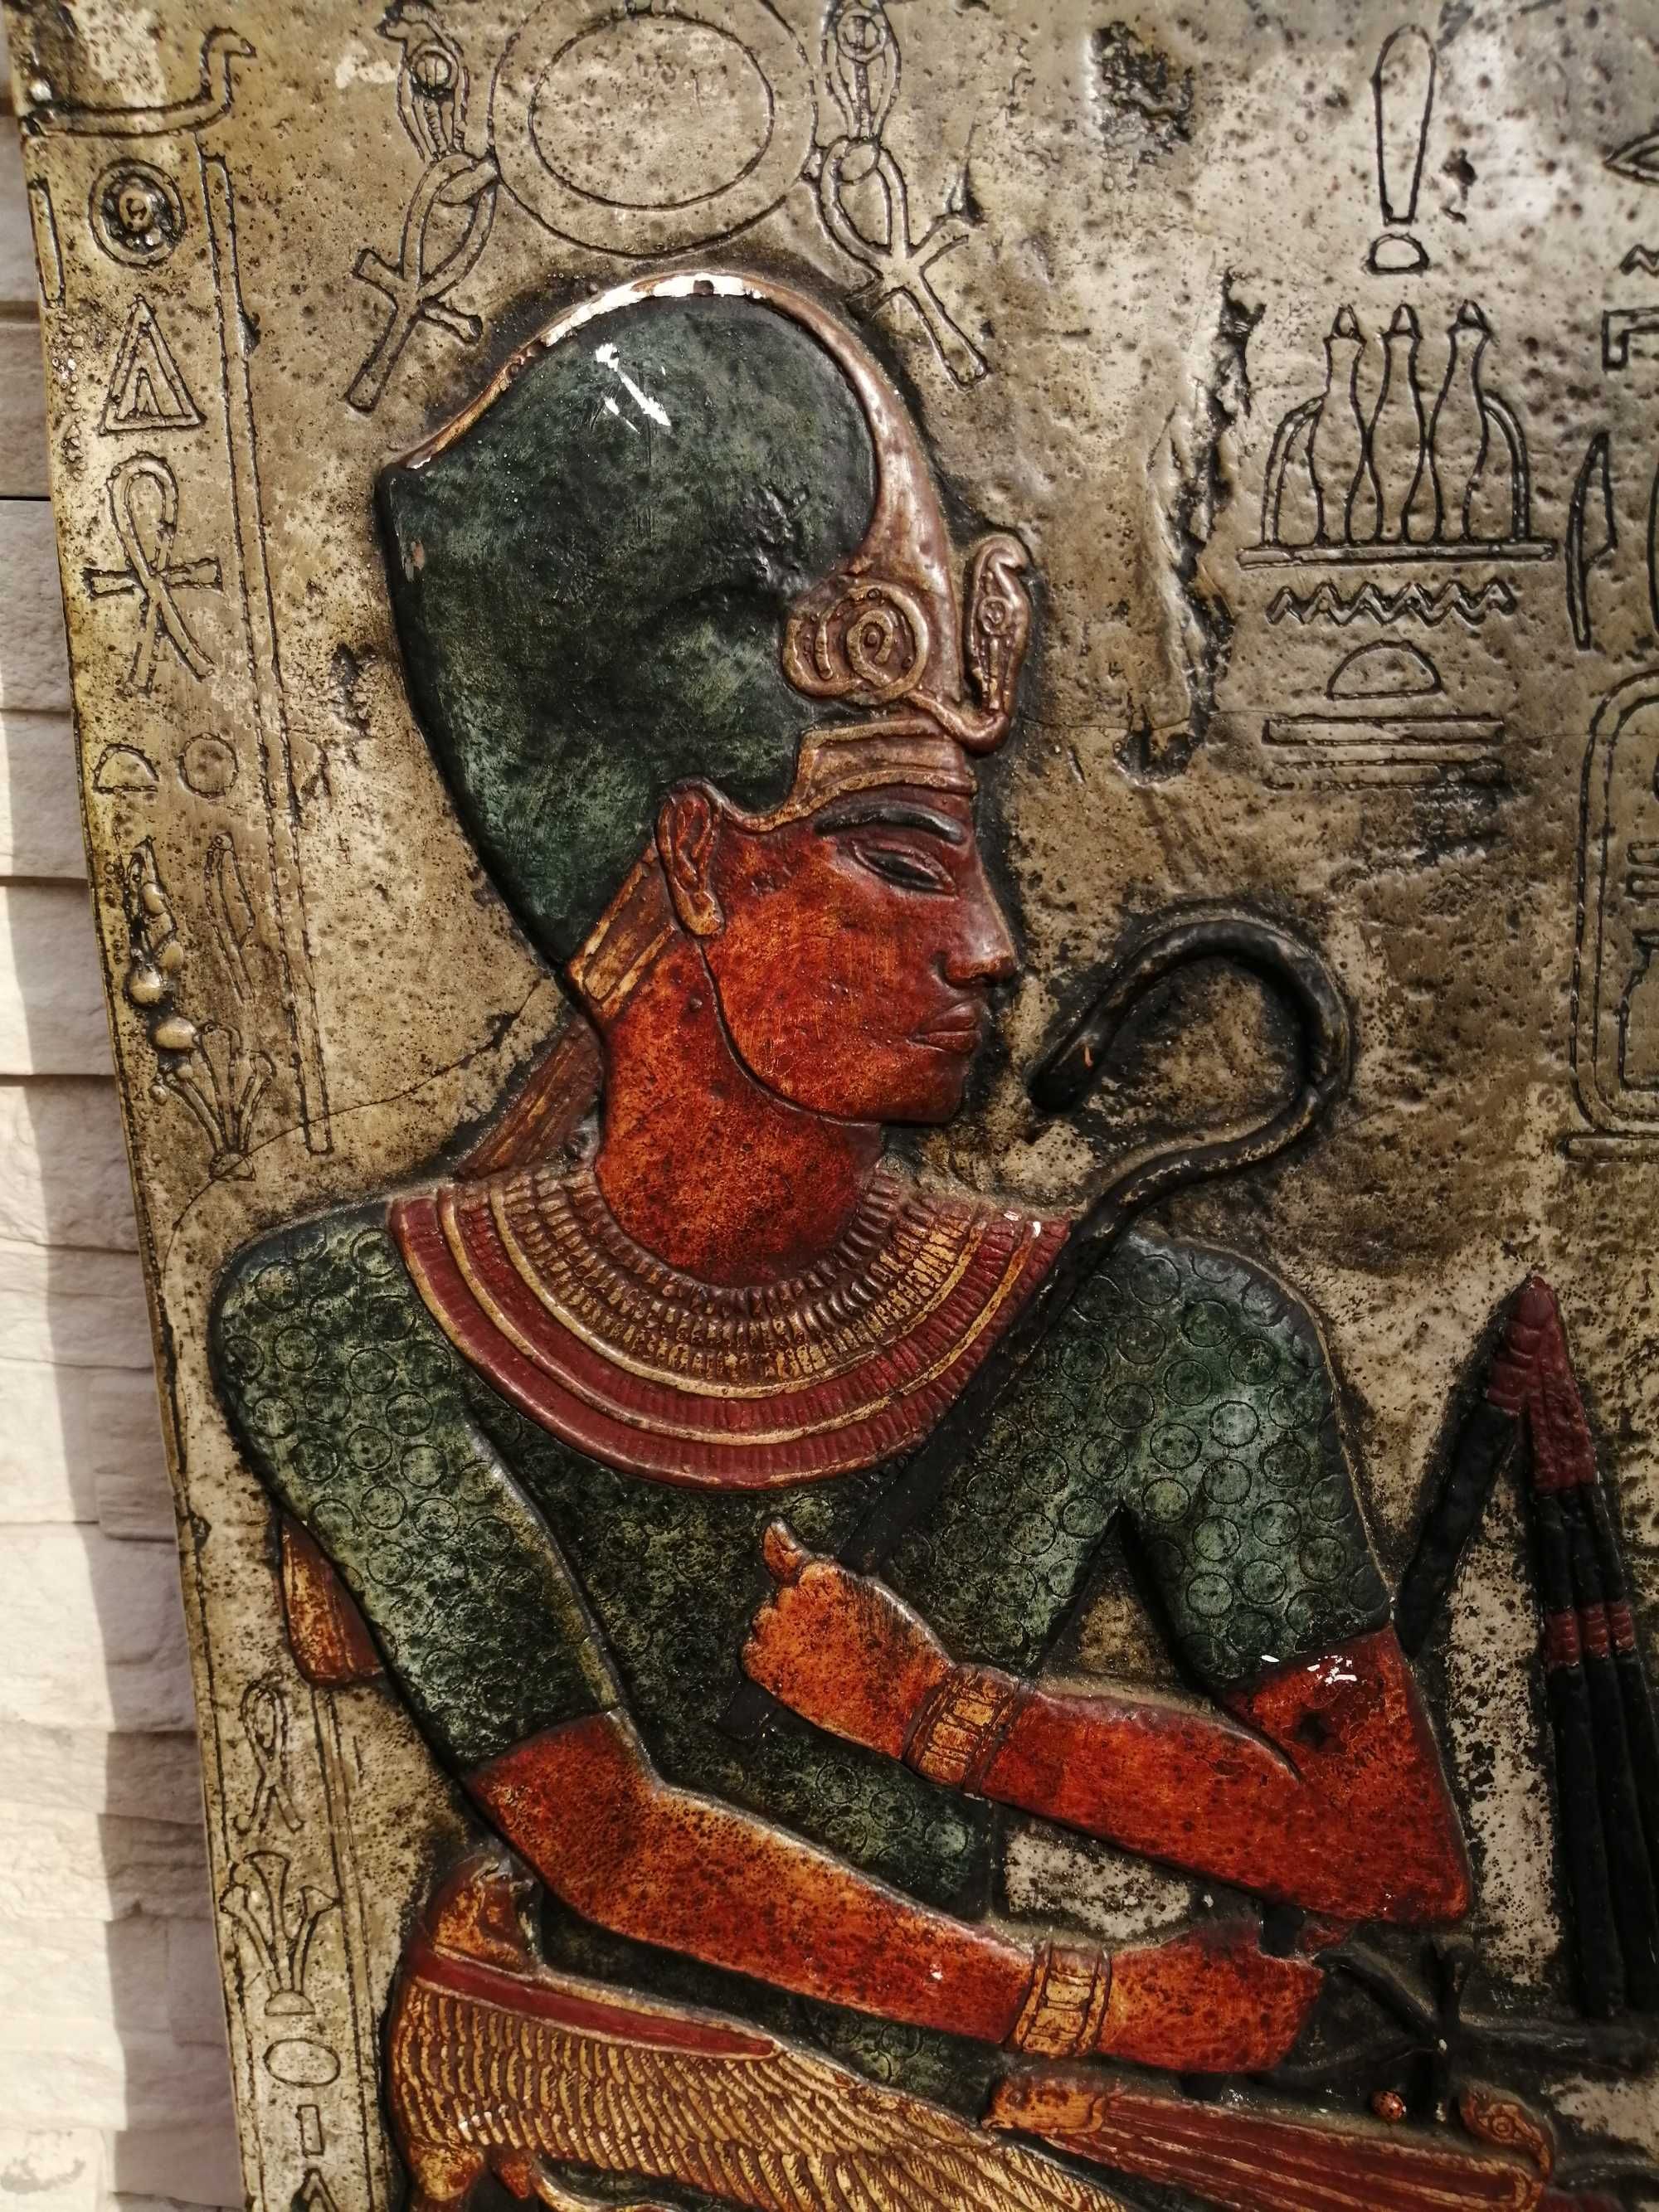 King Amenophis III